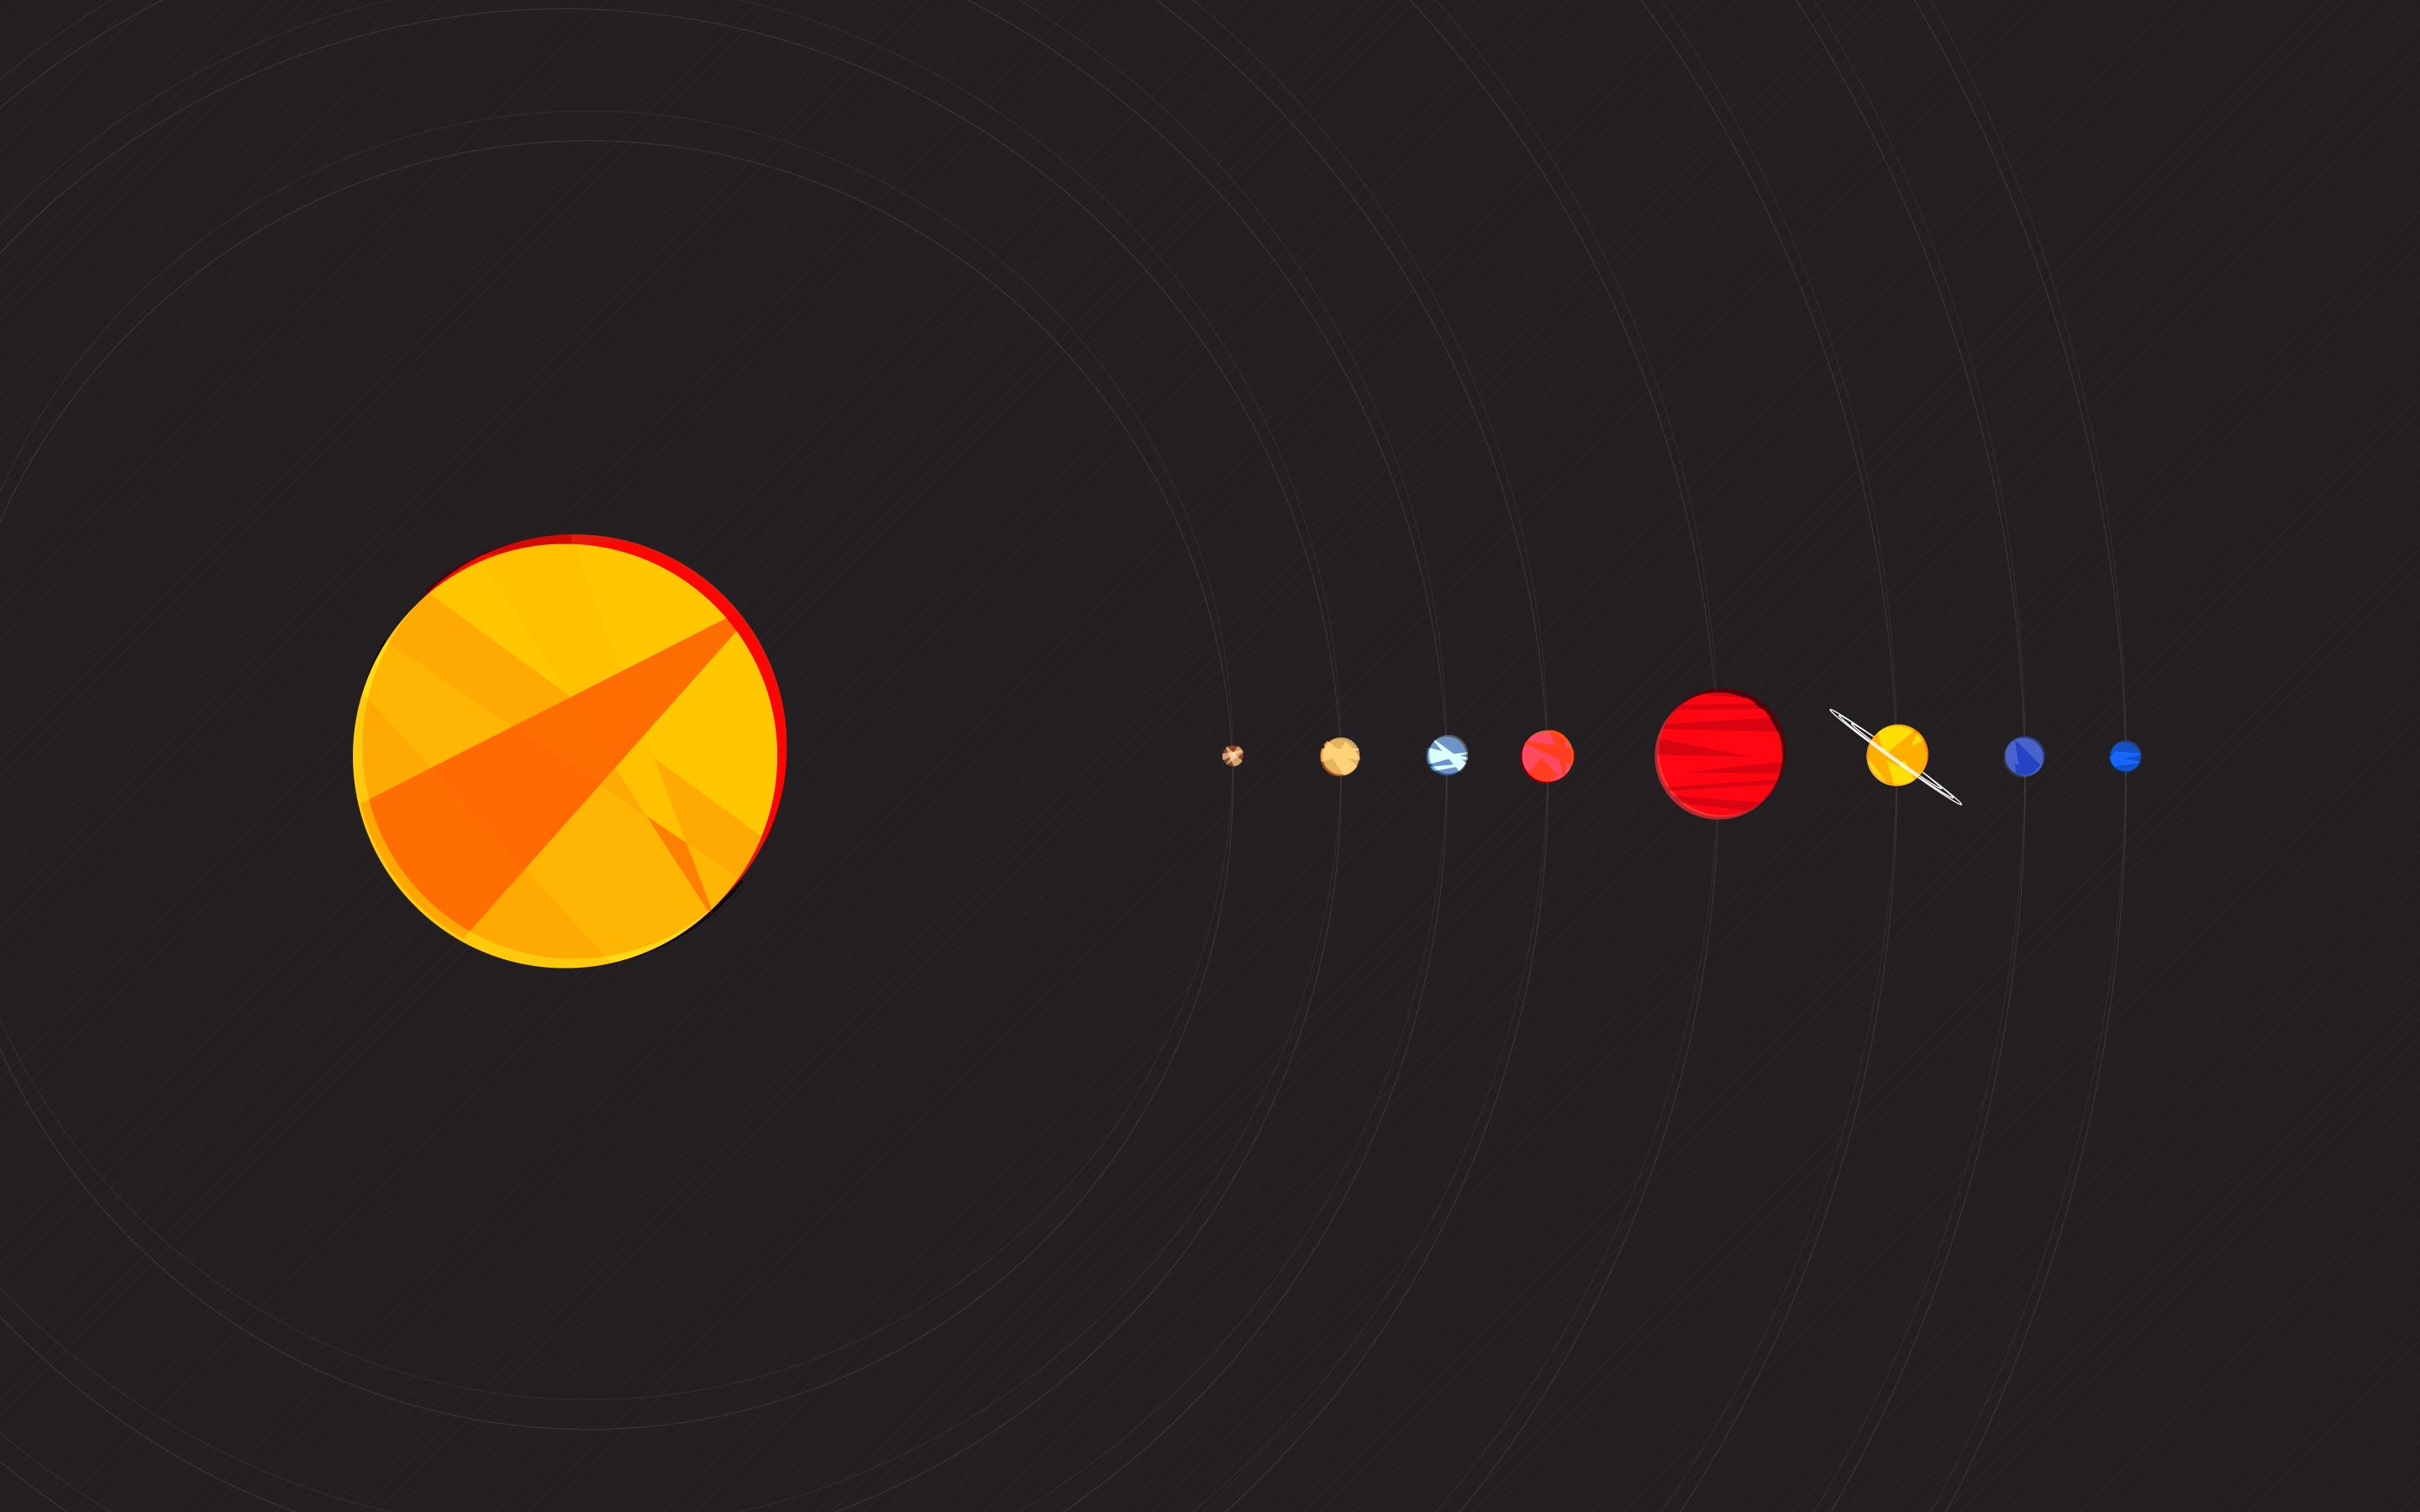 Solar system background